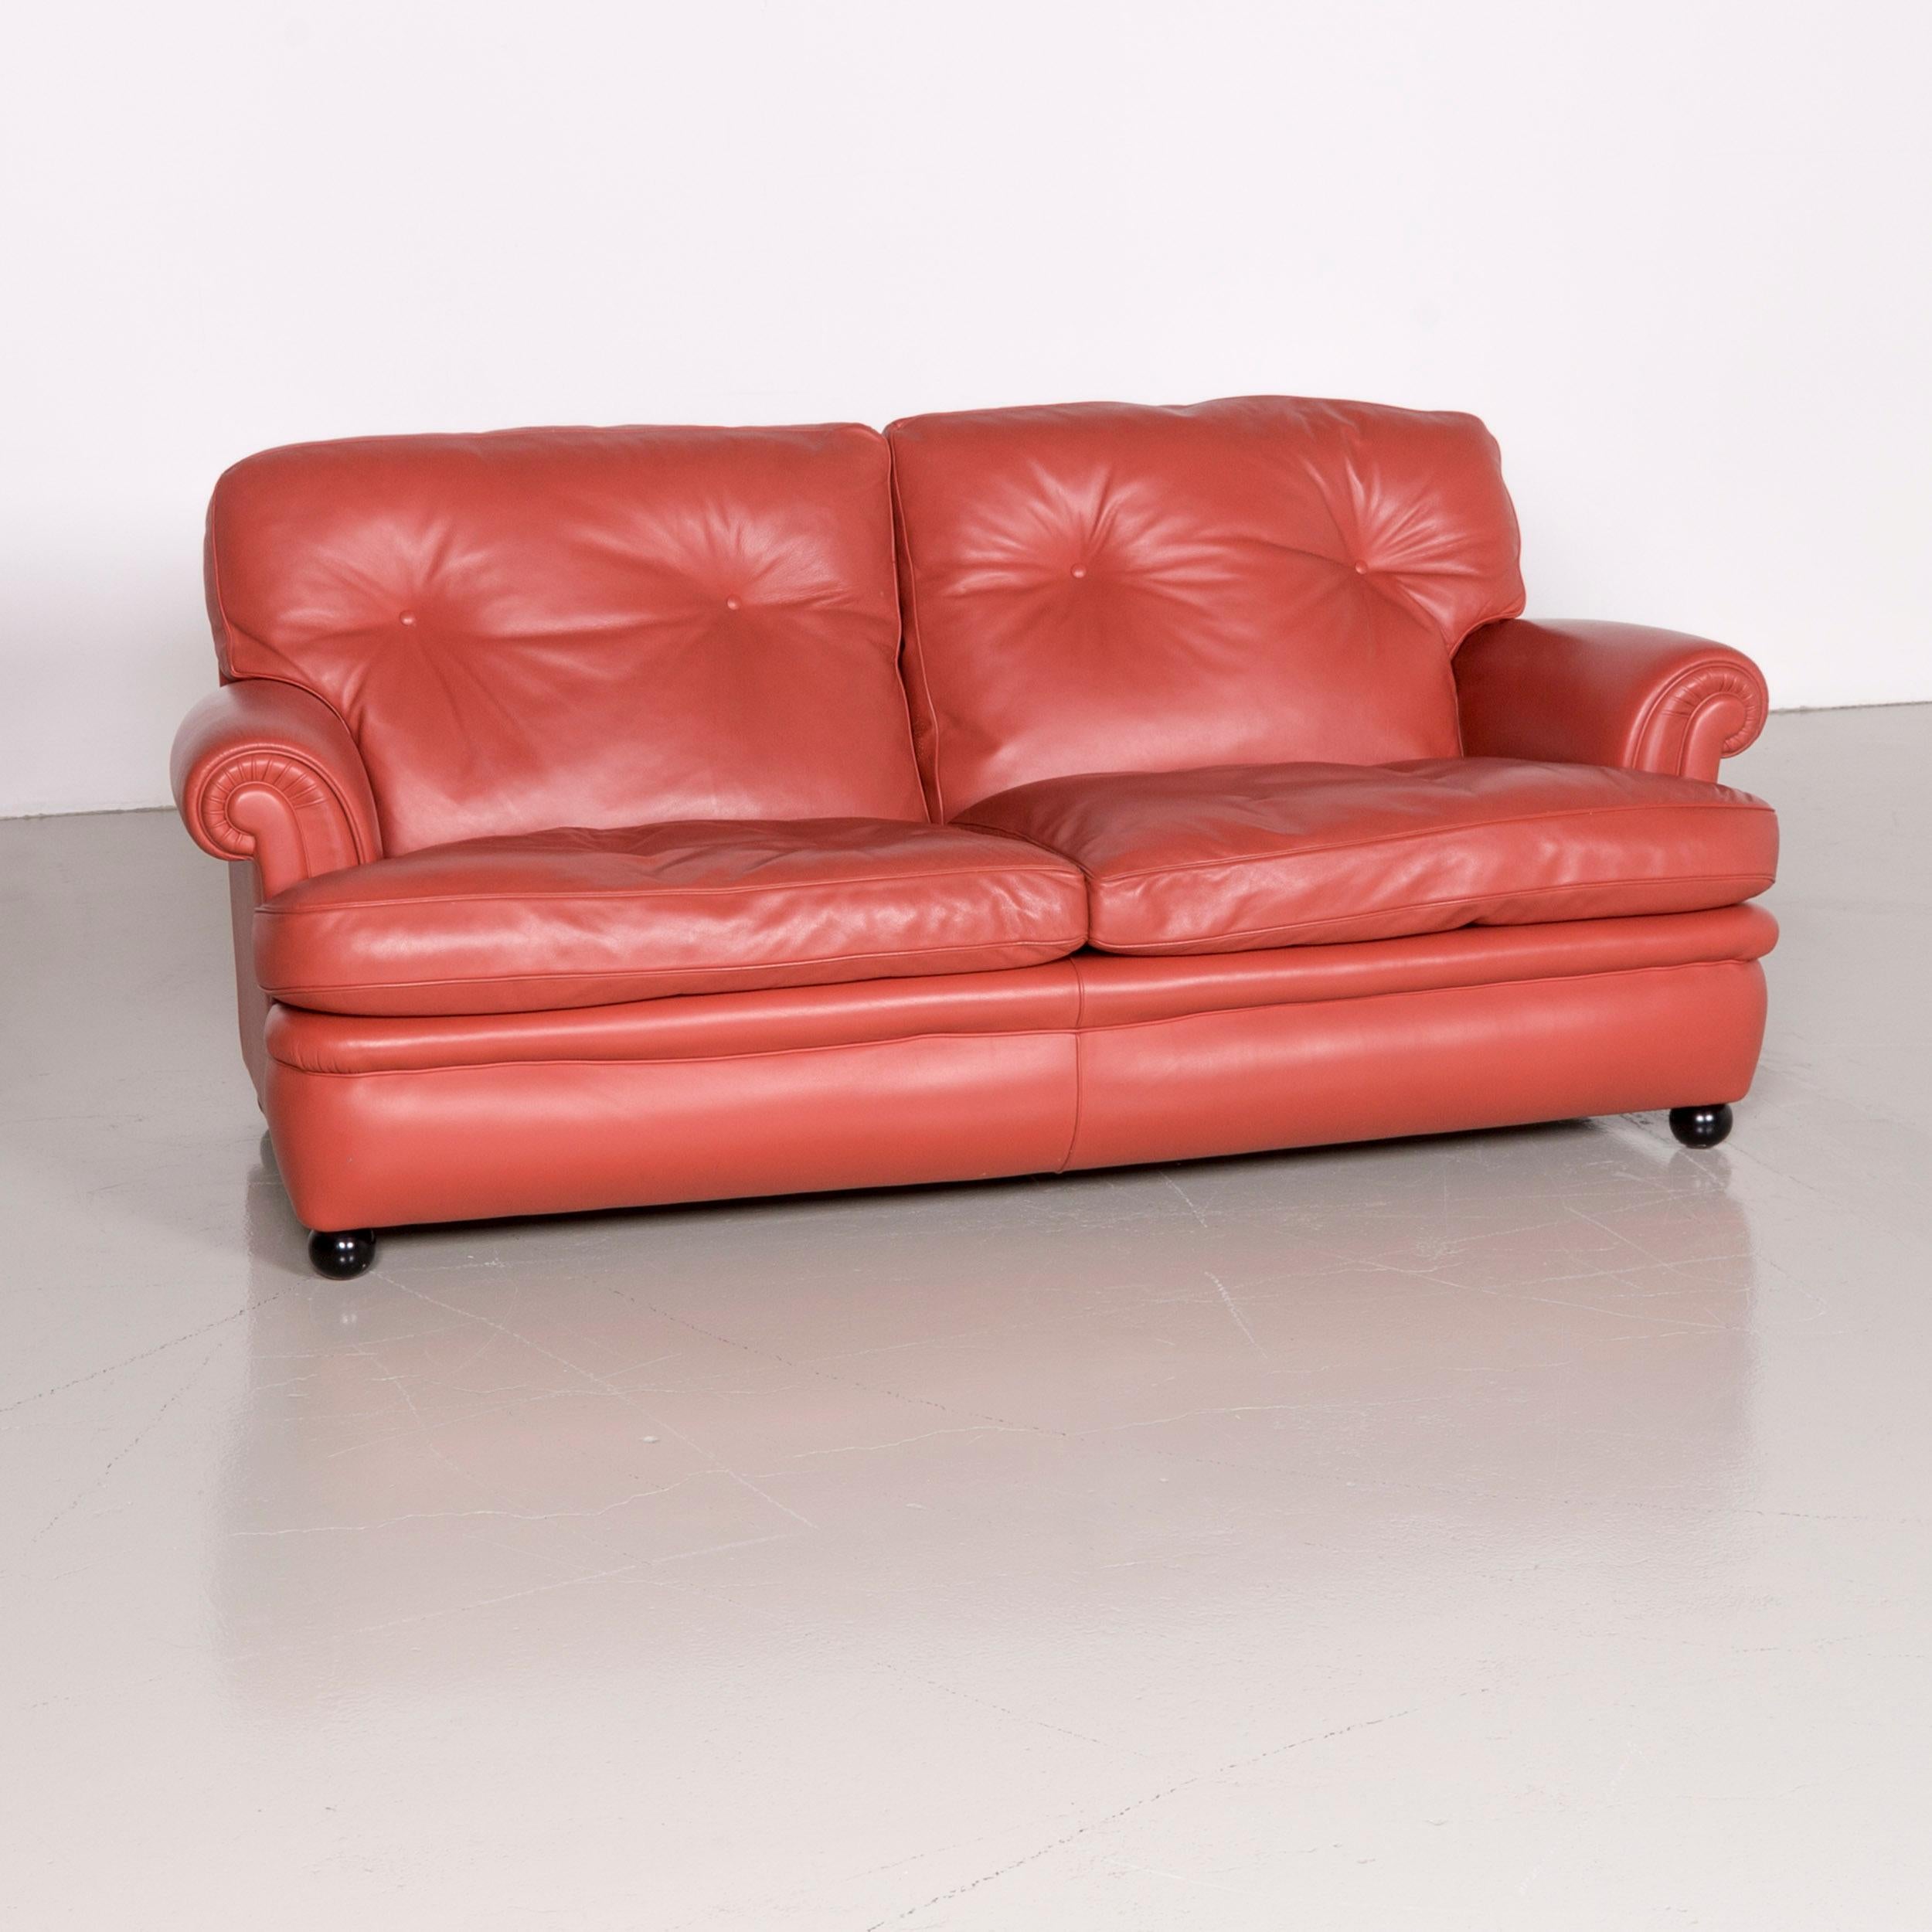 Italian Poltrona Frau Dream on Designer Leather Two-Seat Couch Orange